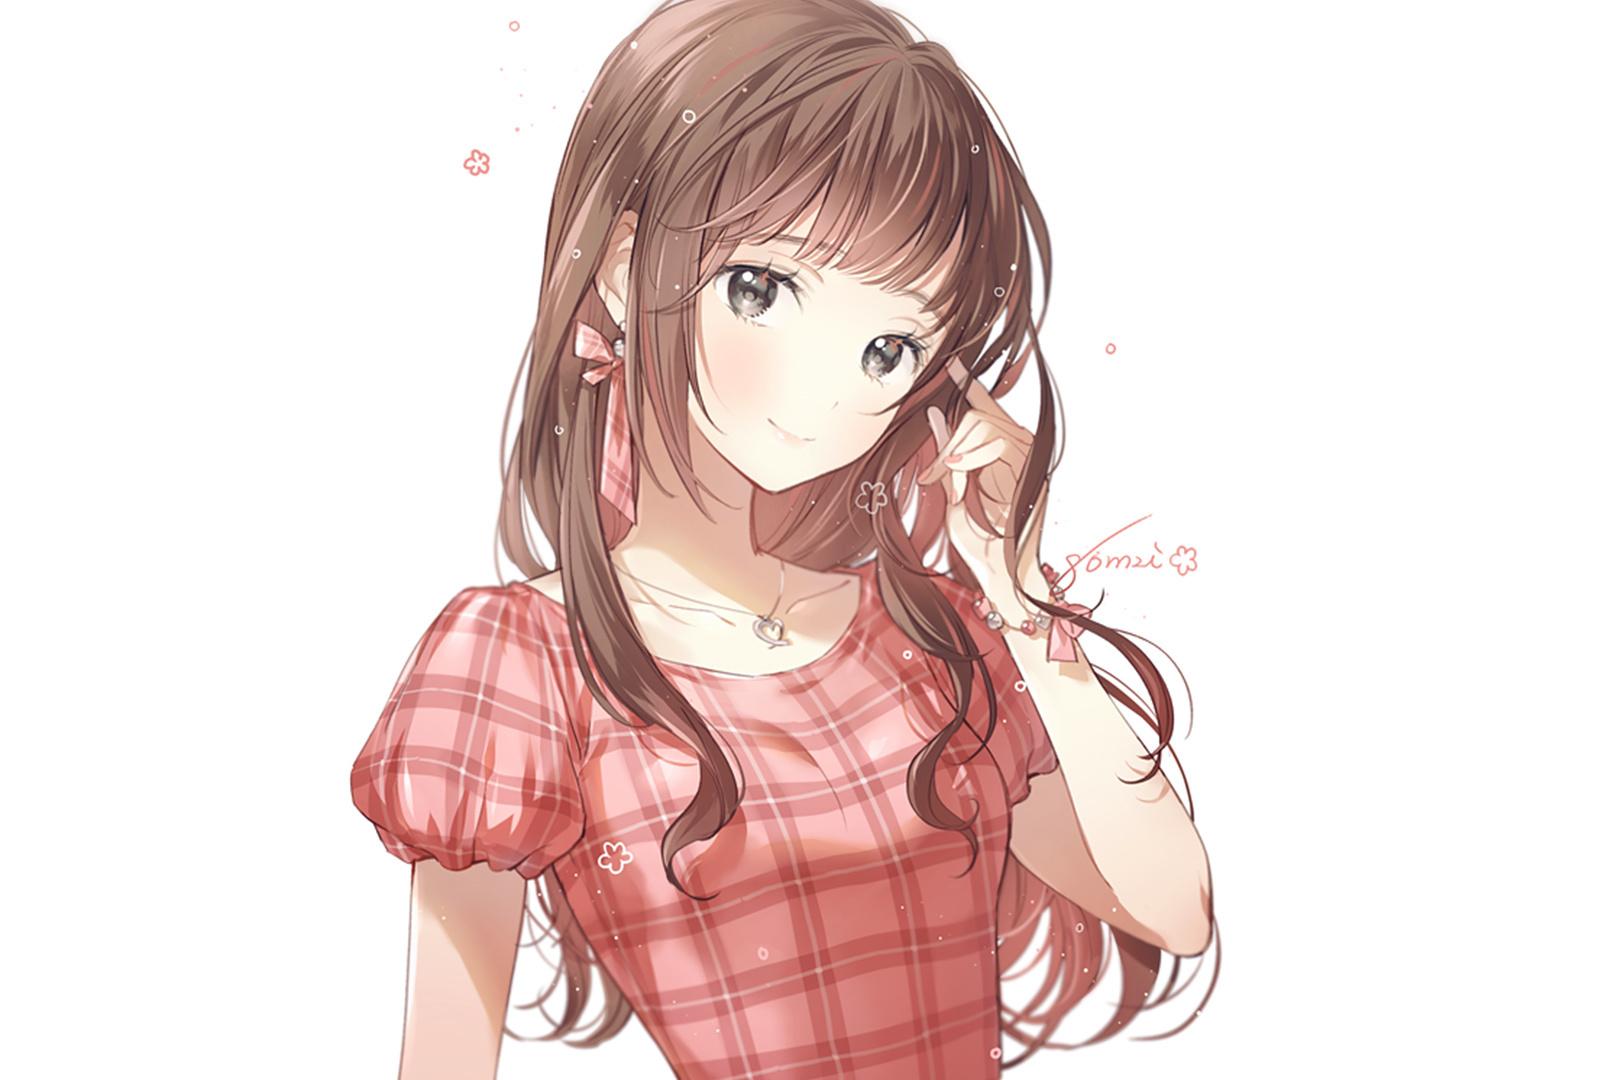 Cute anime girl with long hair wearing glasses  Stock Illustration  73637535  PIXTA